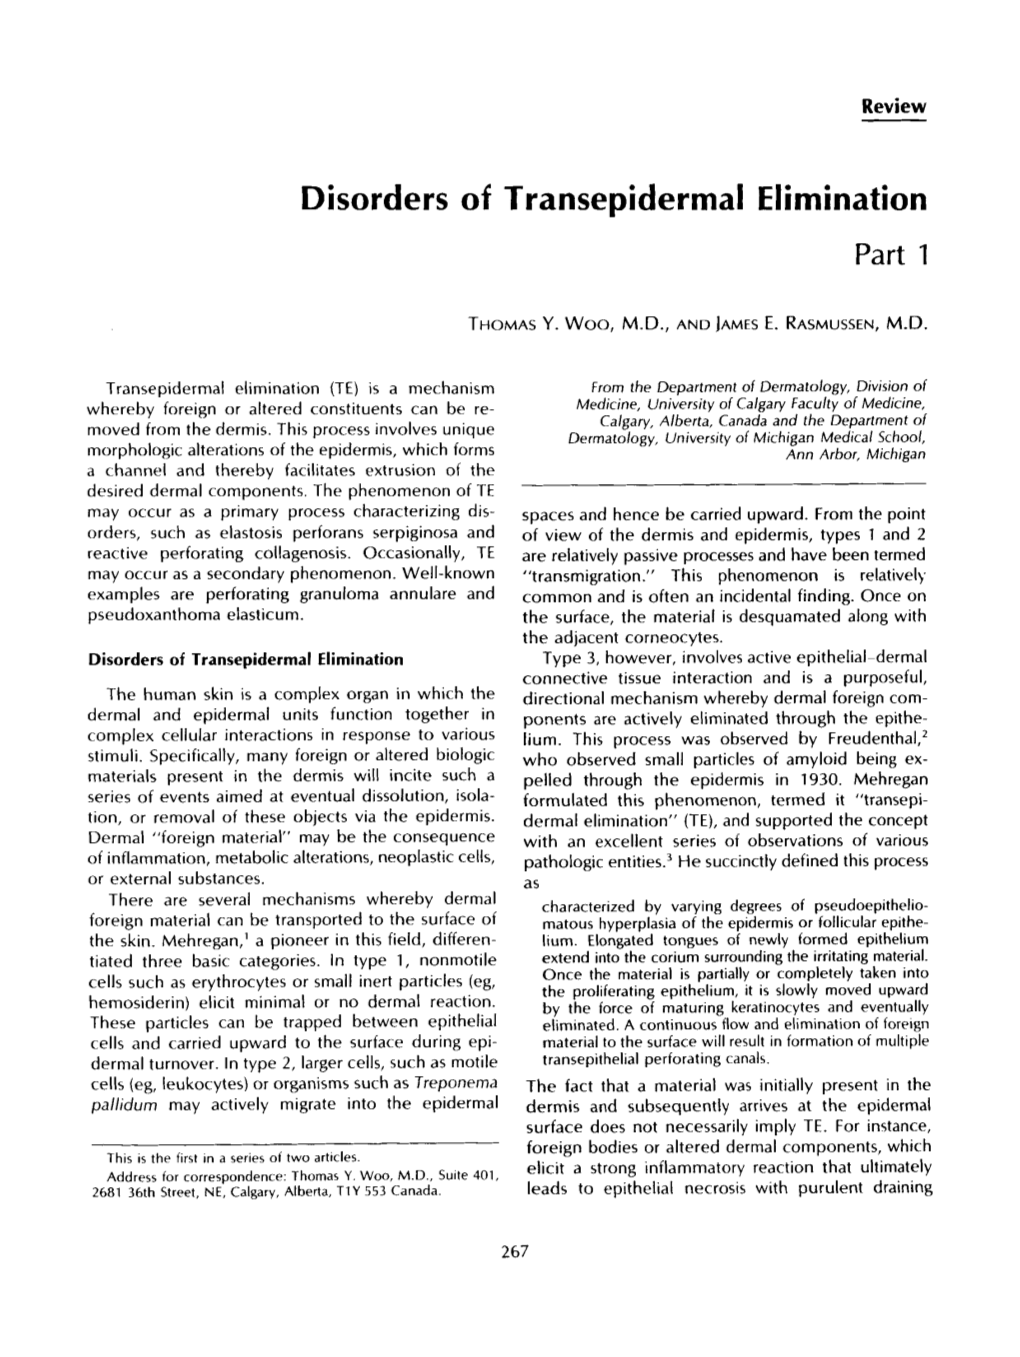 Disorders of Transepidermal Elimination Part 1